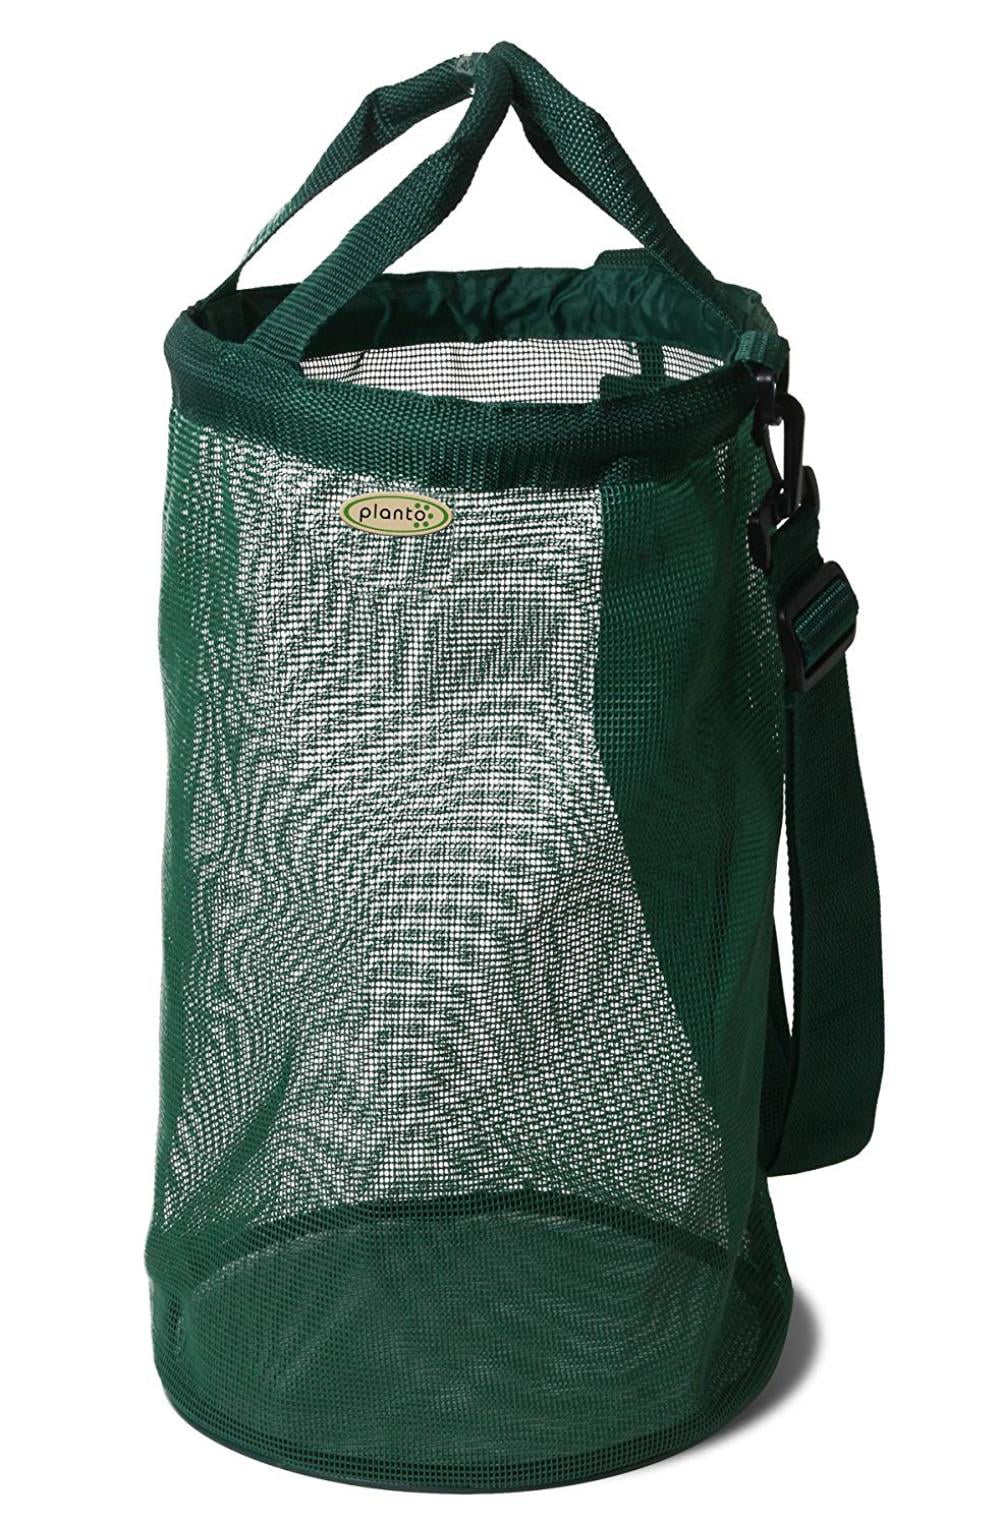 Planto Exaco 90208 Harvesting Bag, Excellent harvesting bag for ...